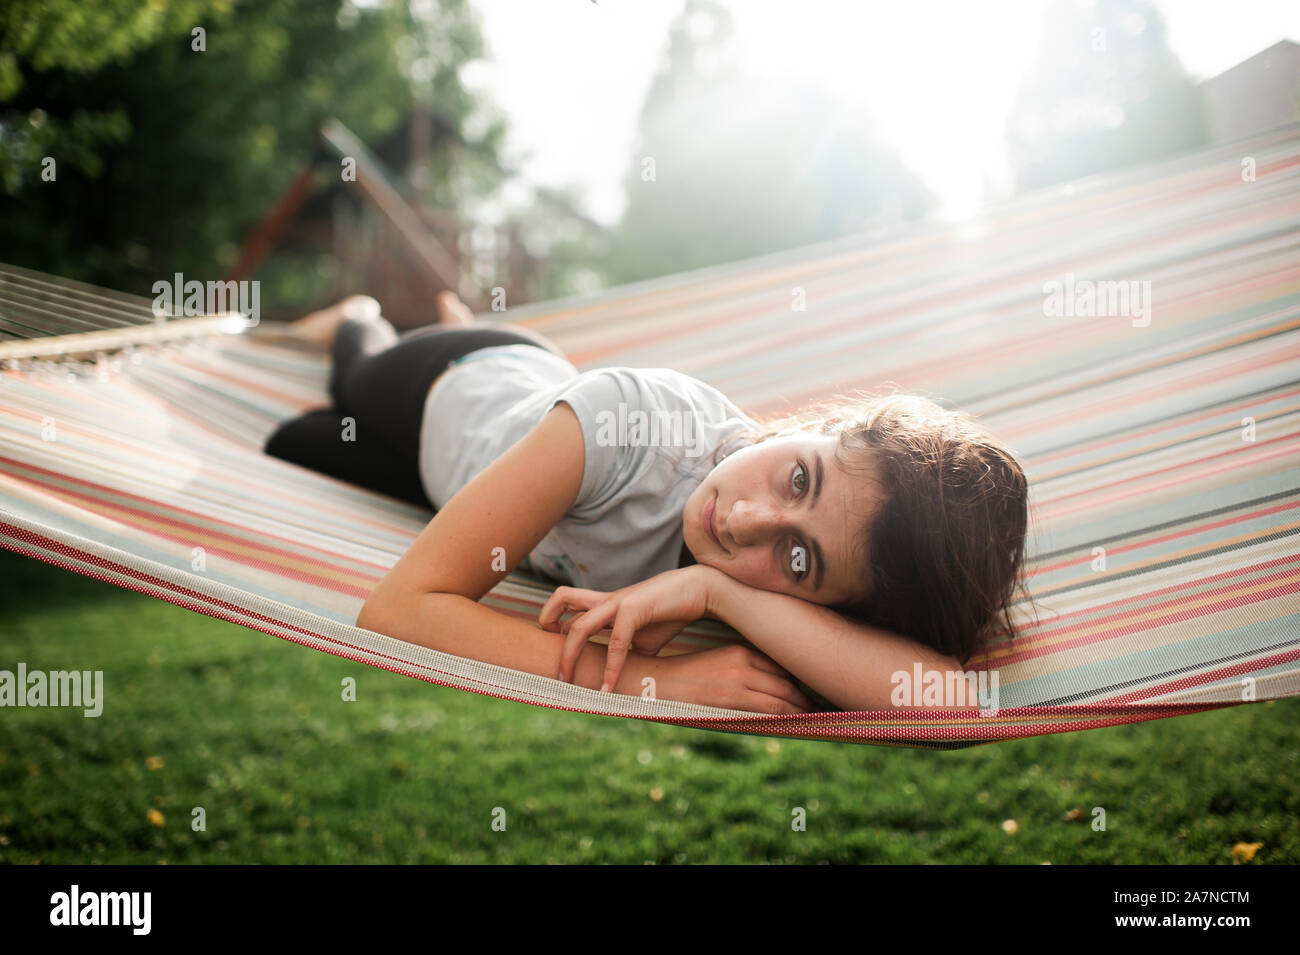 Tween girl looking while laying in hammock in backyard on spring day Stock Photo